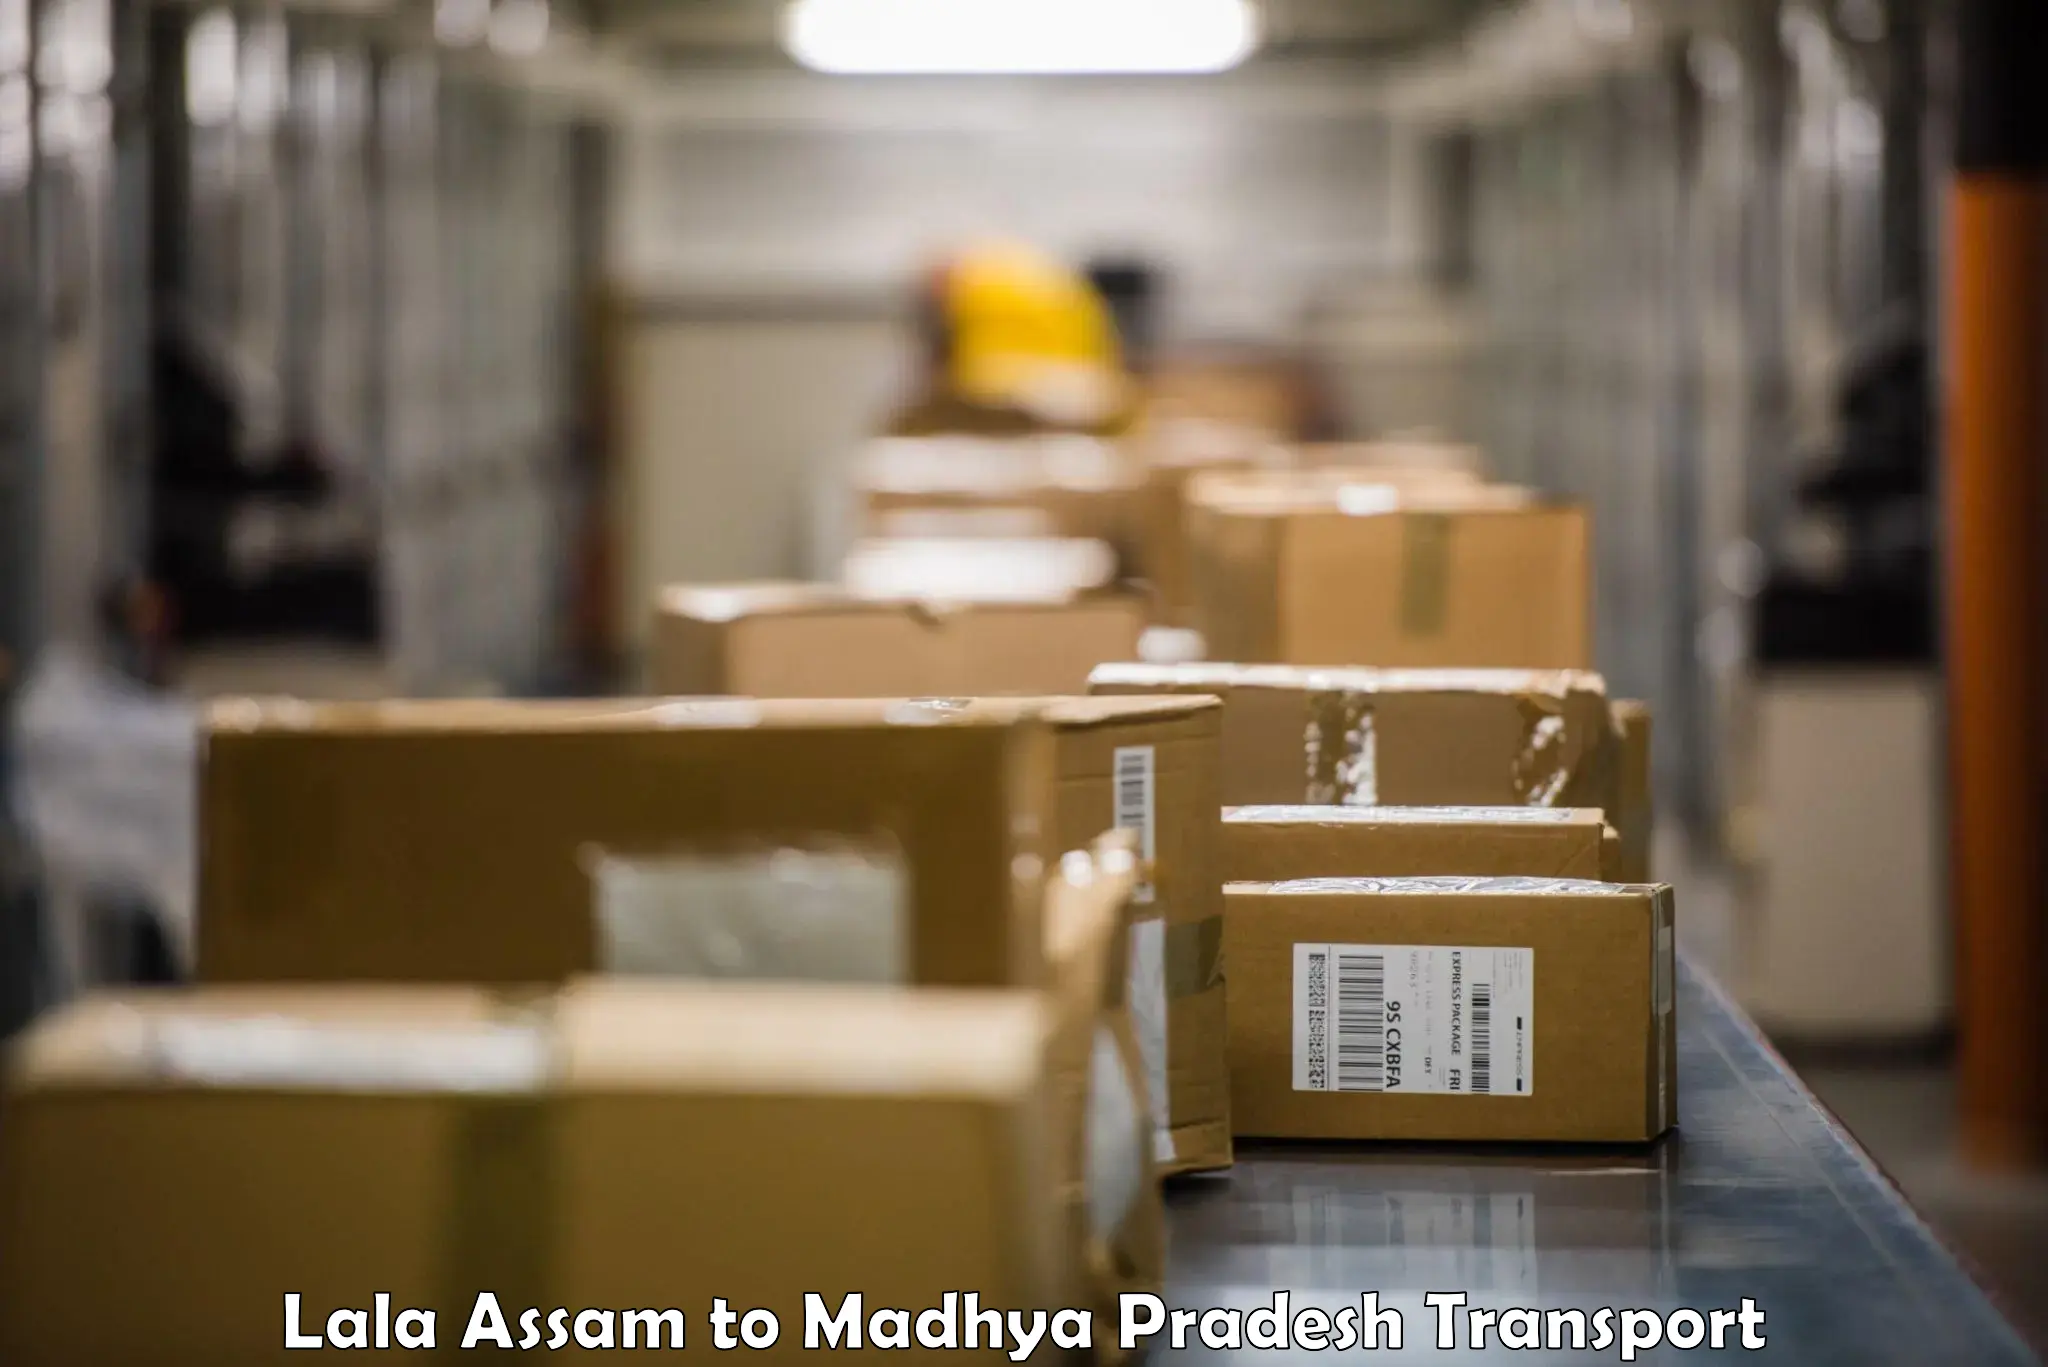 Delivery service Lala Assam to Madhya Pradesh